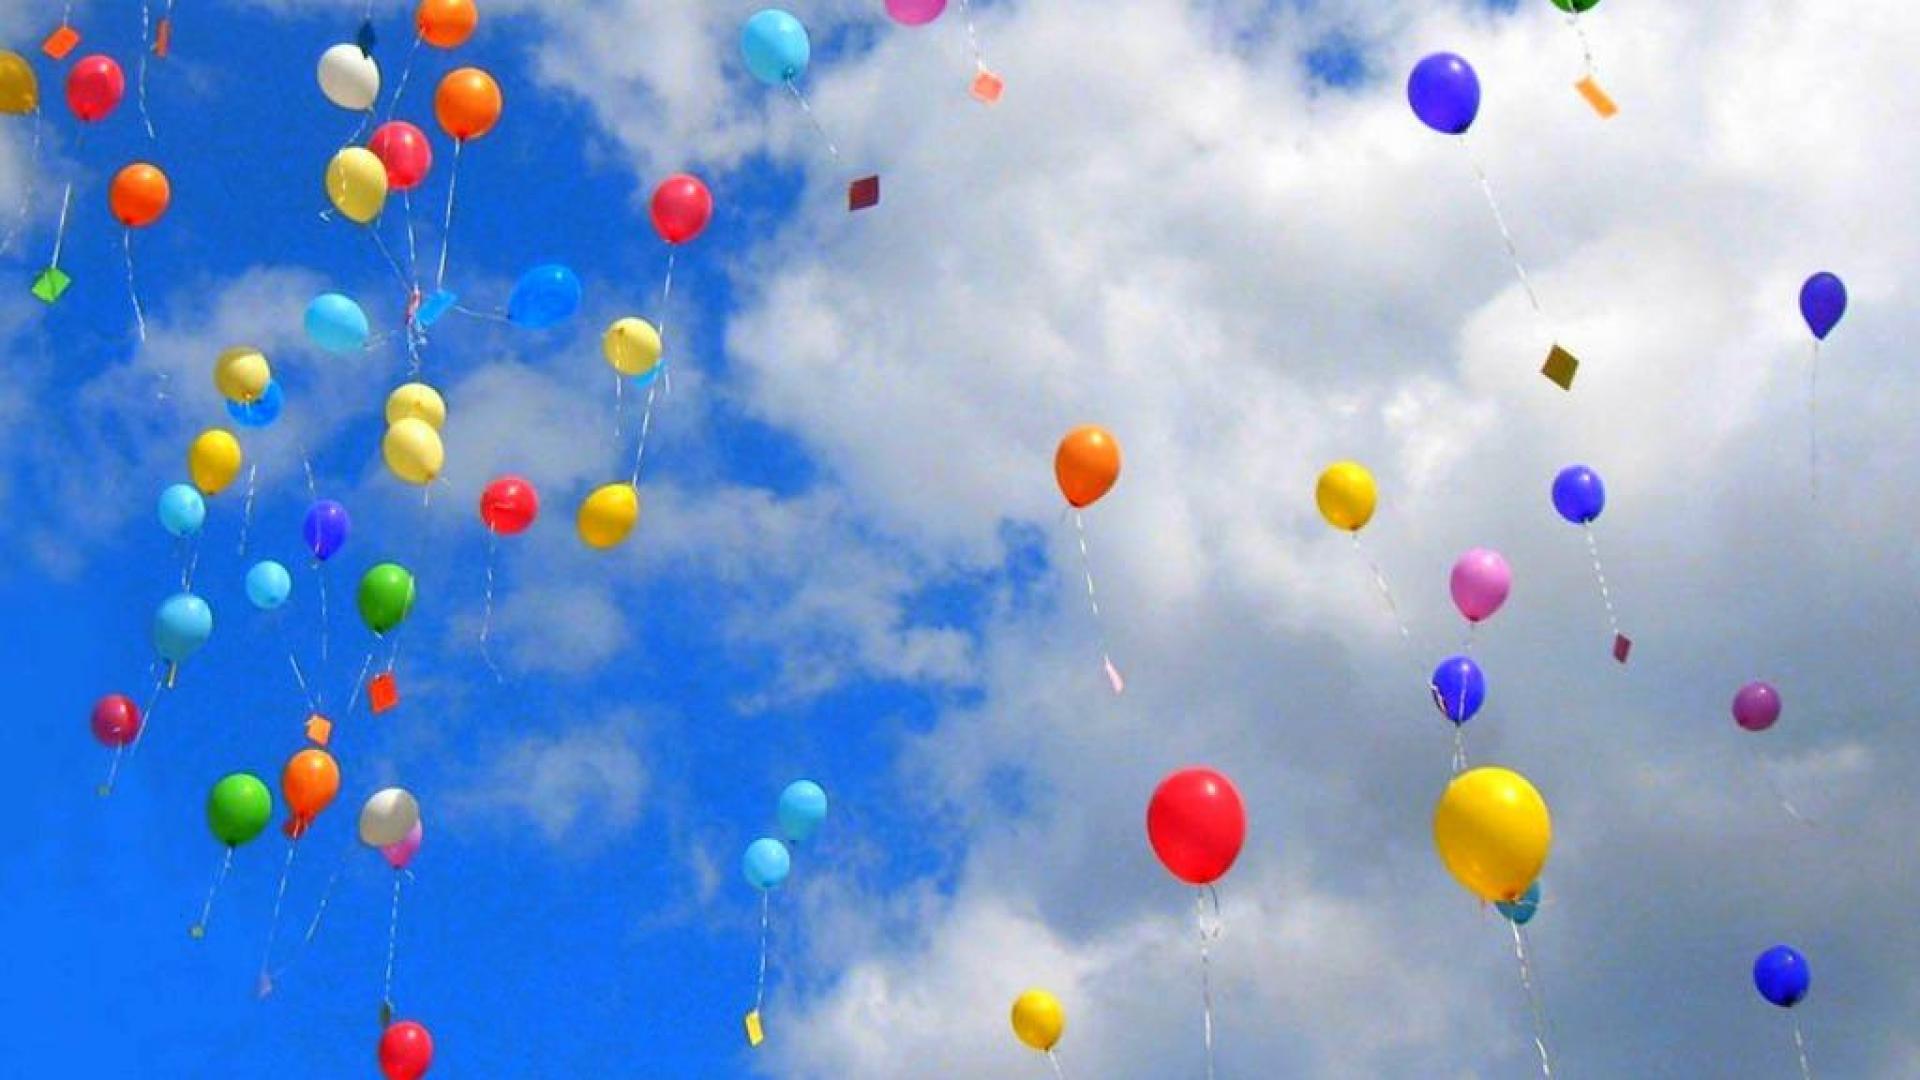 tapete balon,ballon,blau,partyversorgung,himmel,buntheit